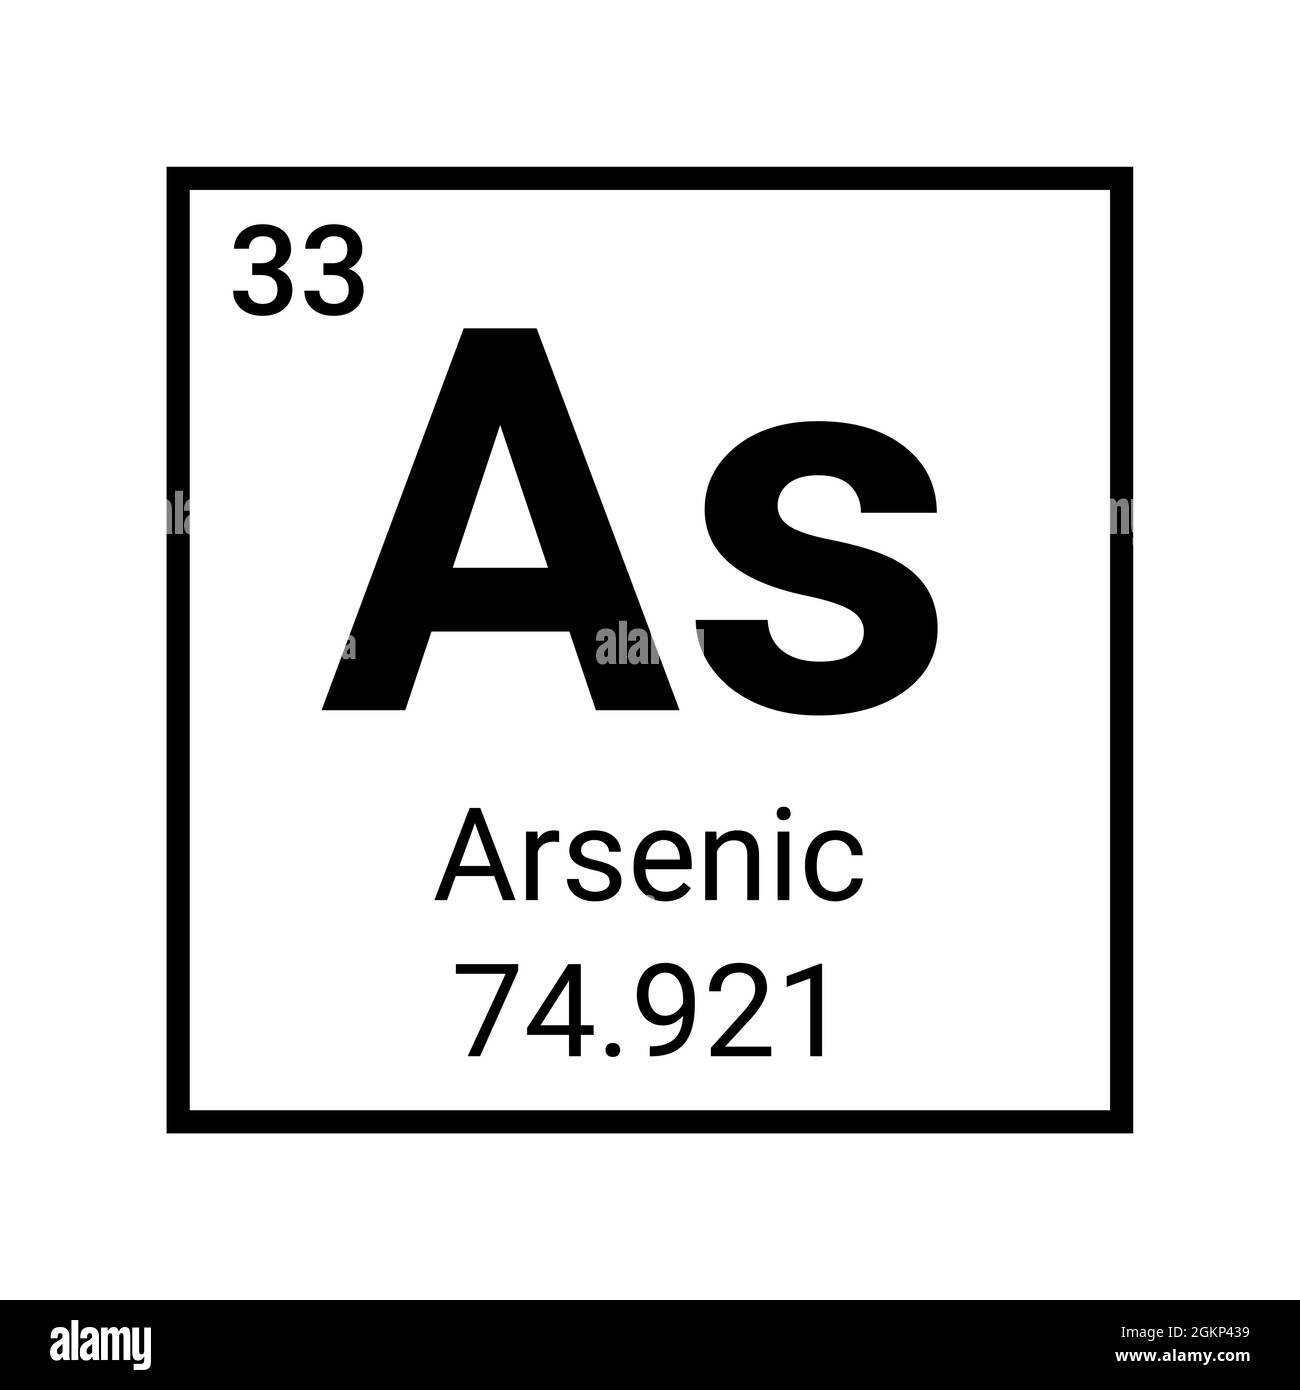 Arsenic periodic table element icon. Chemical symbol arsenic atom Stock Vector